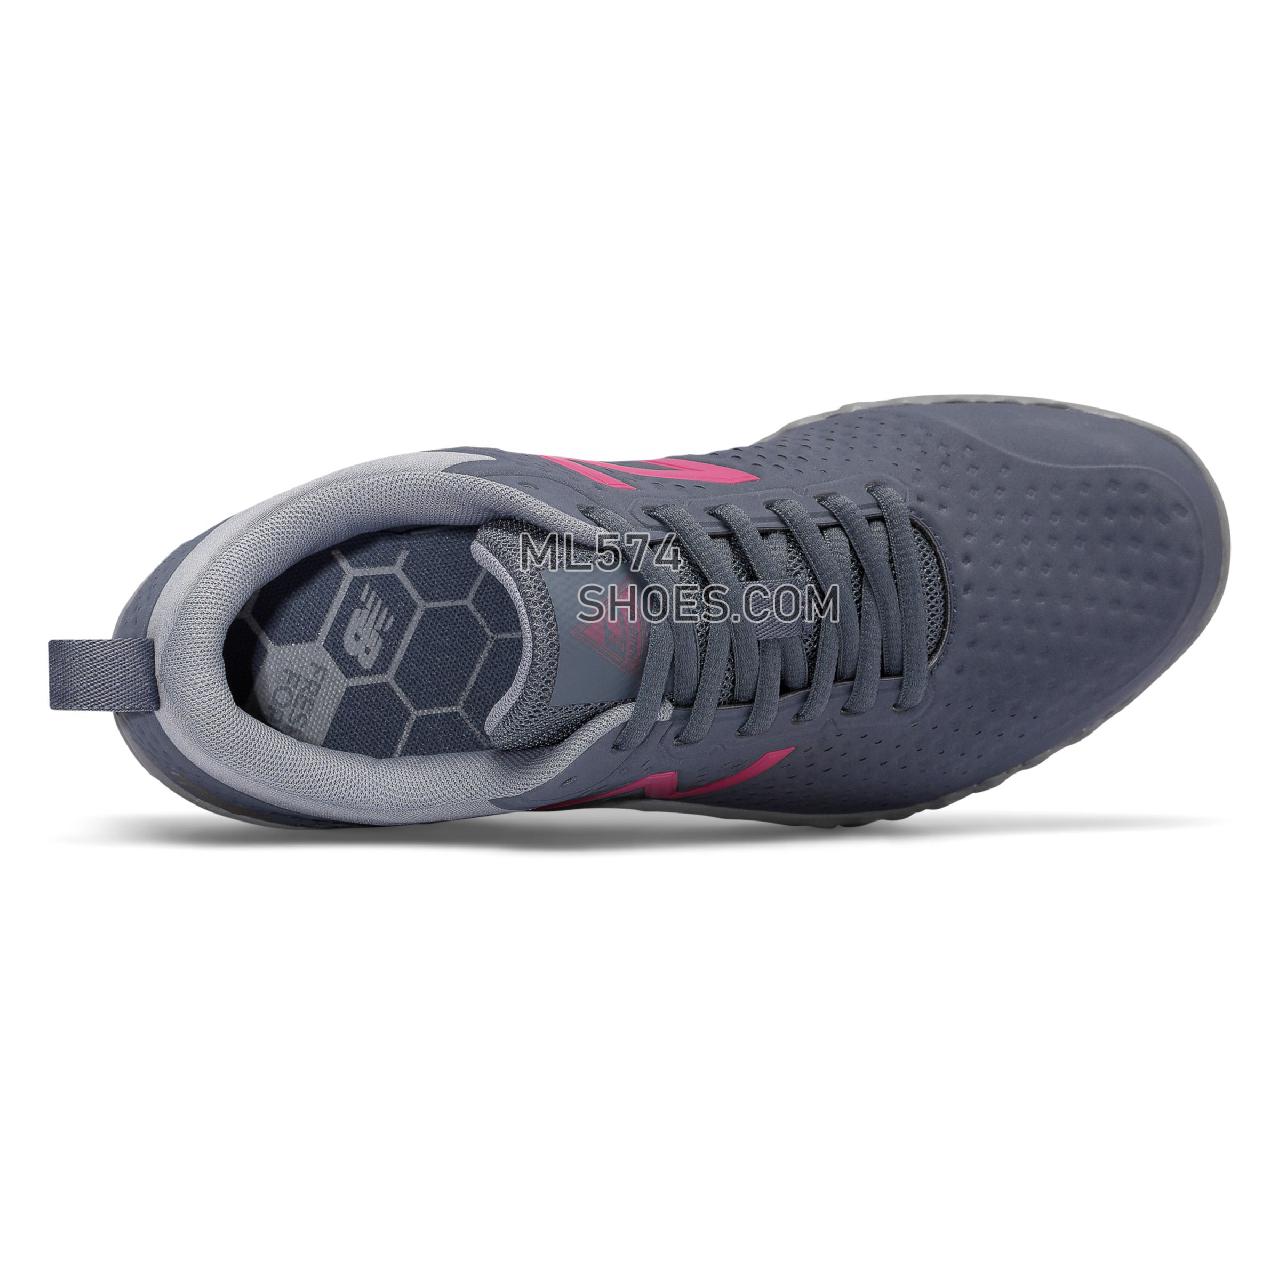 New Balance Slip Resistant Fresh Foam 806 - Women's 806 - Industrial Grey with Pink - WID806G1